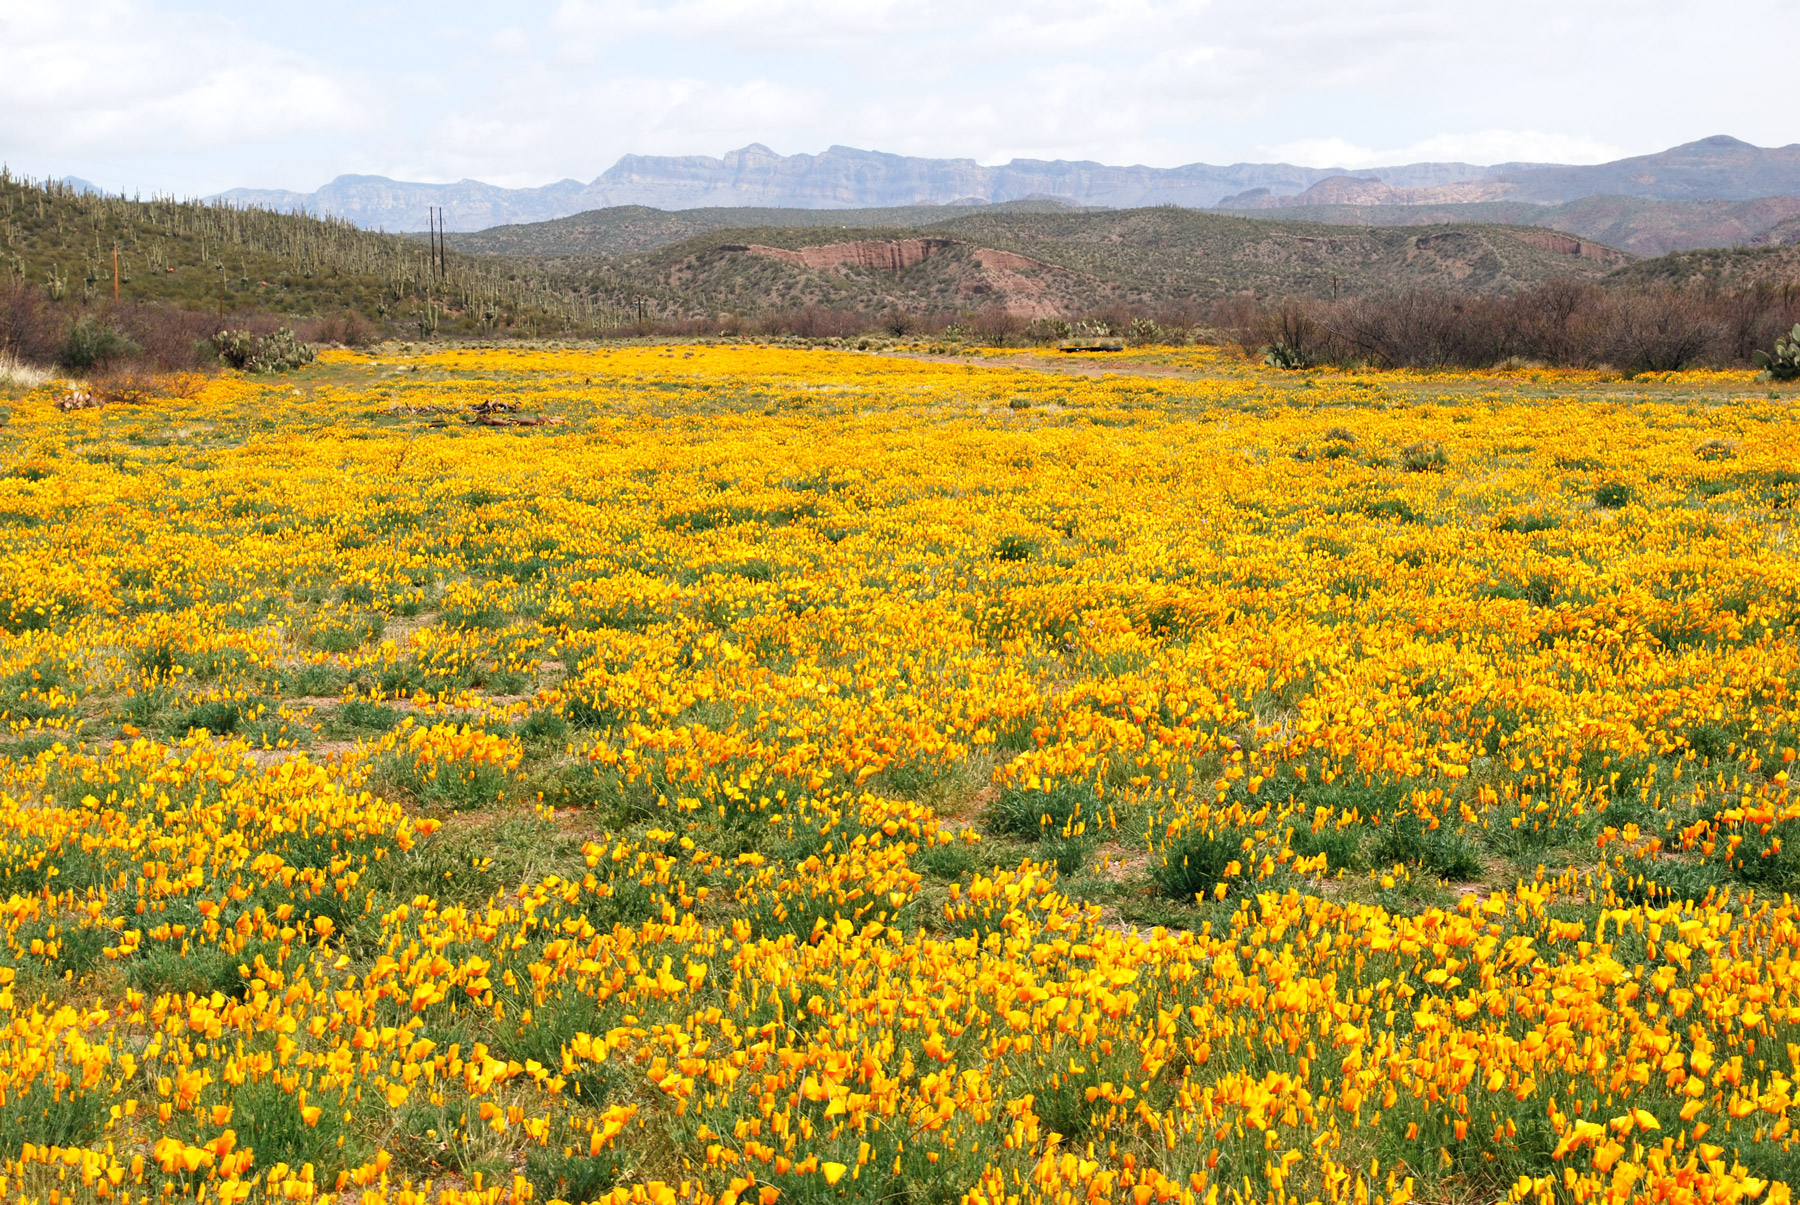 San Pedro Valley in bloom. Photo by Bernard Siquieros.